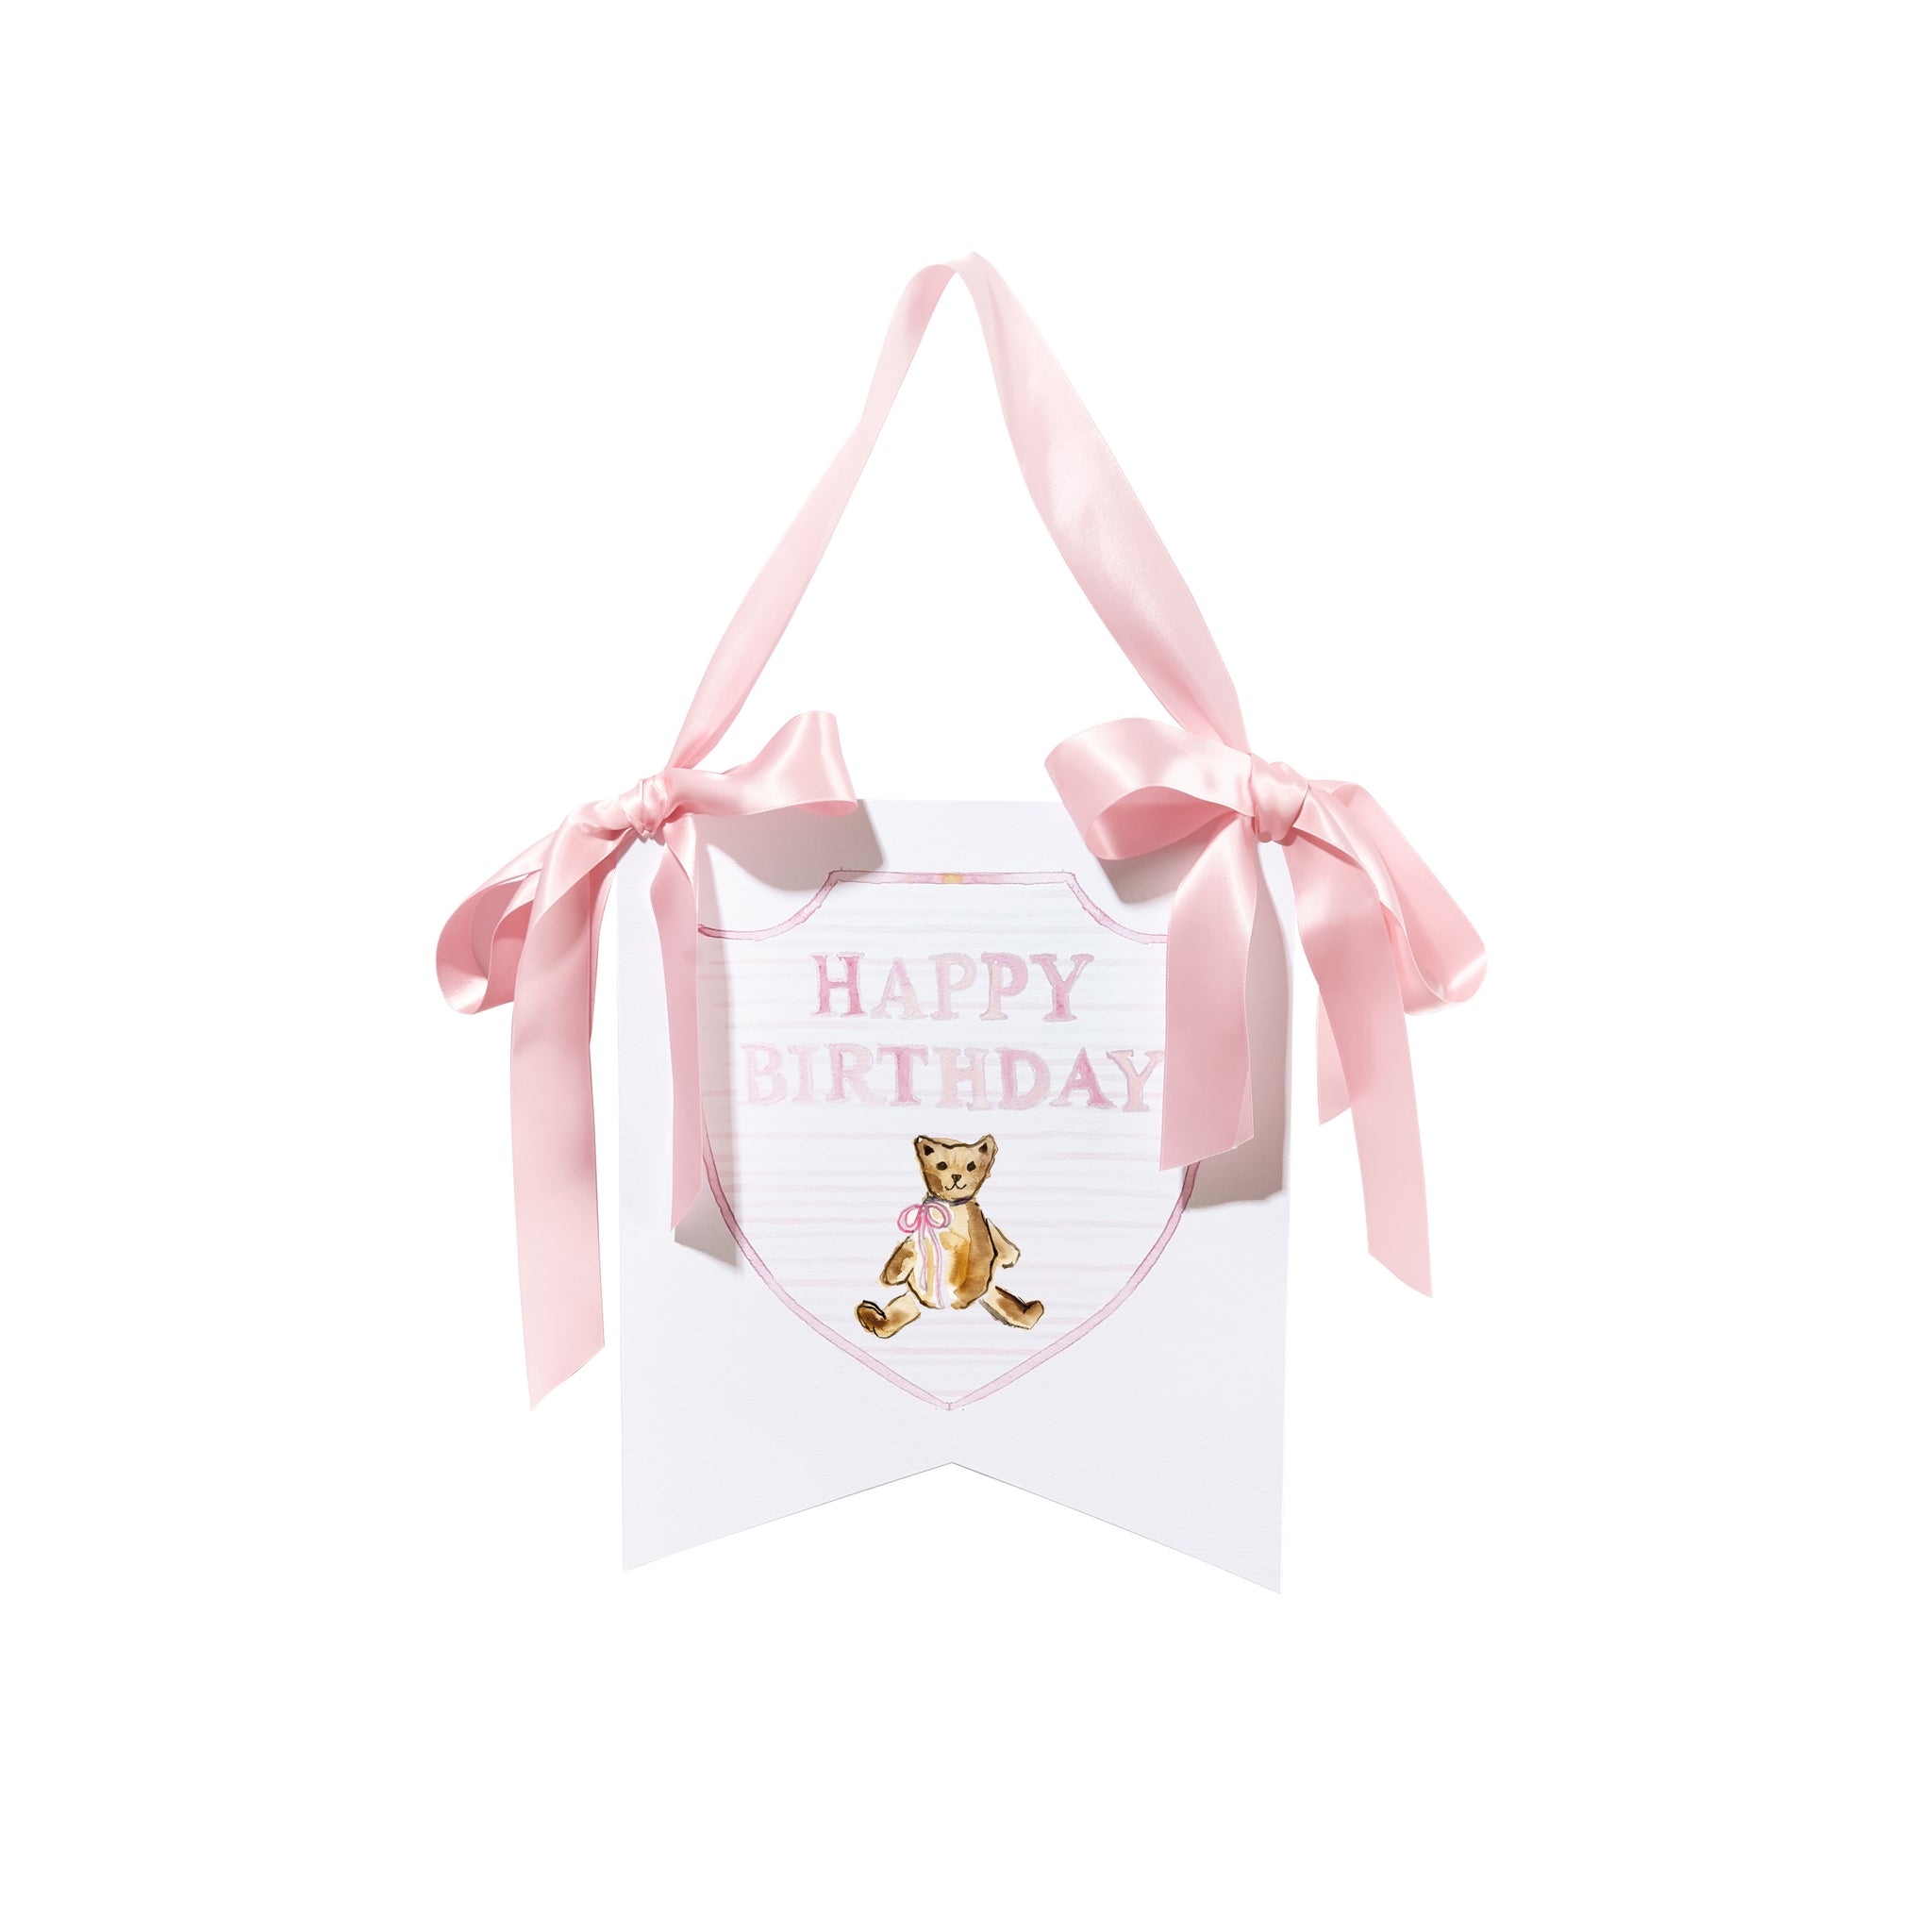 "Happy Birthday" Teddy Bear Hanger - Pink